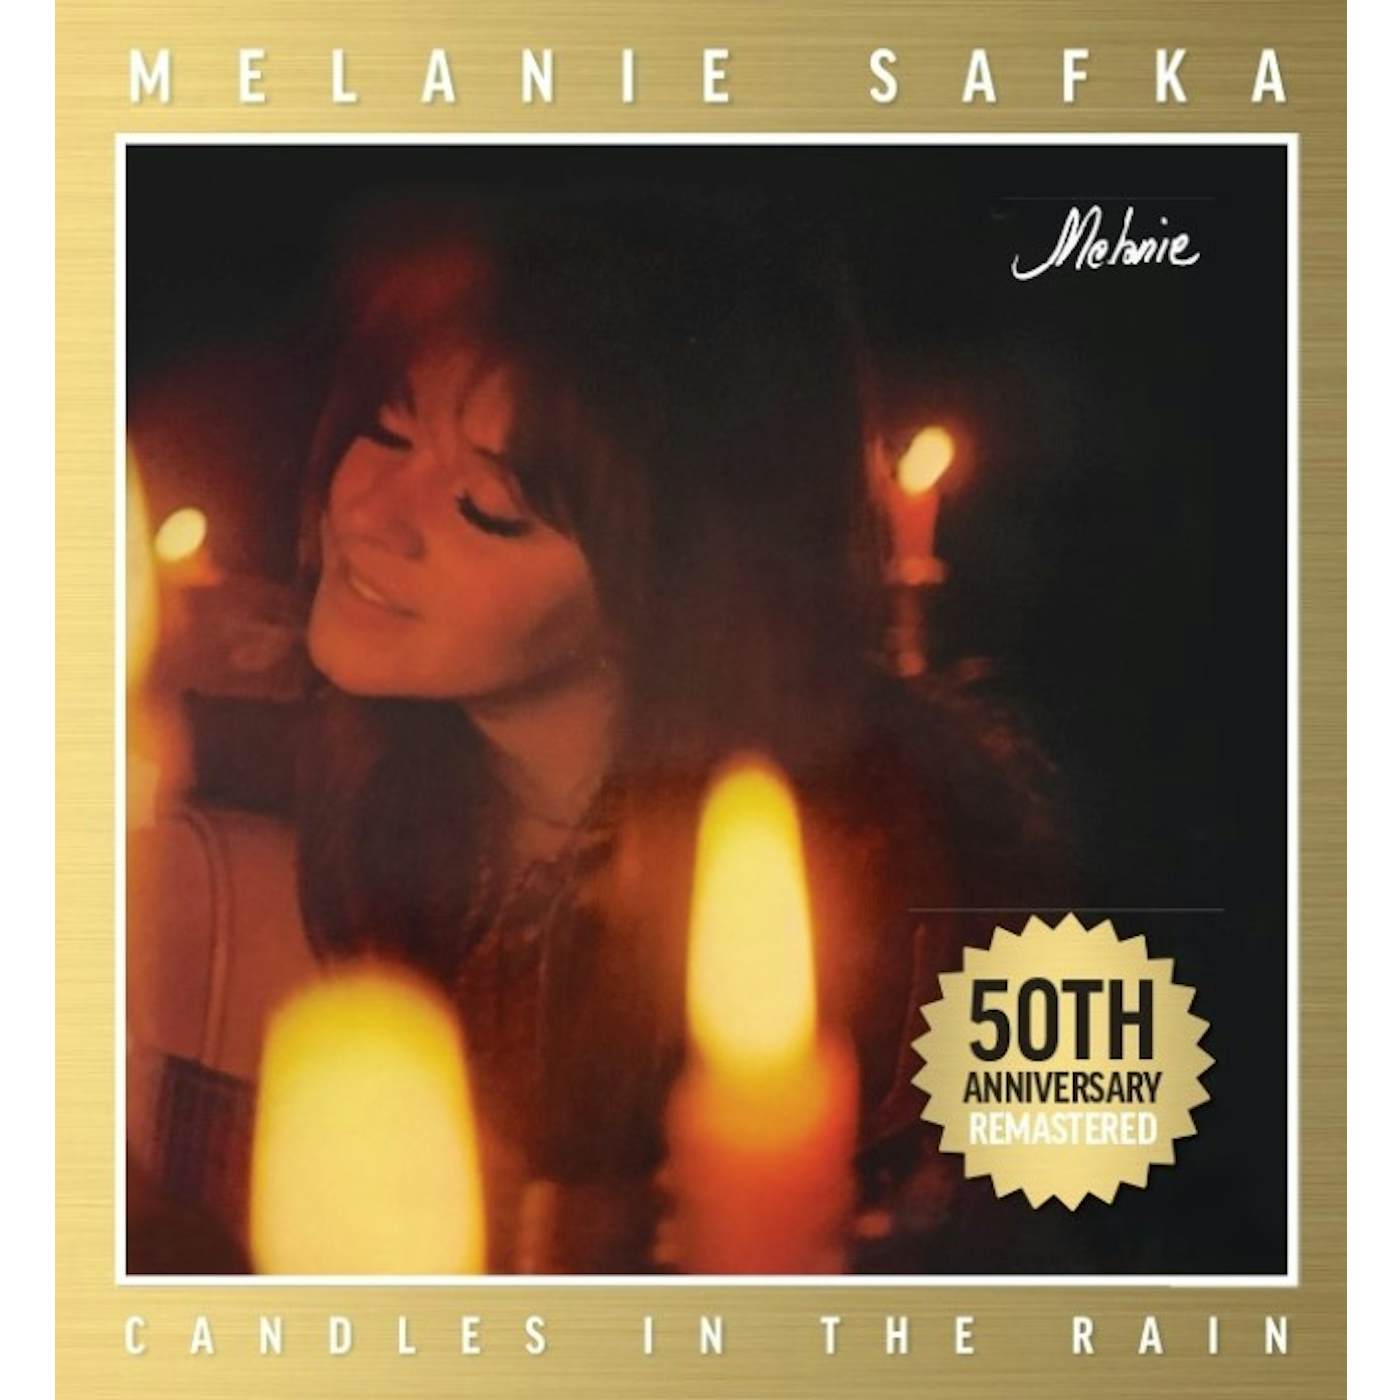 Melanie CANDLES IN THE RAIN: 50TH ANNIVERSARY Vinyl Record